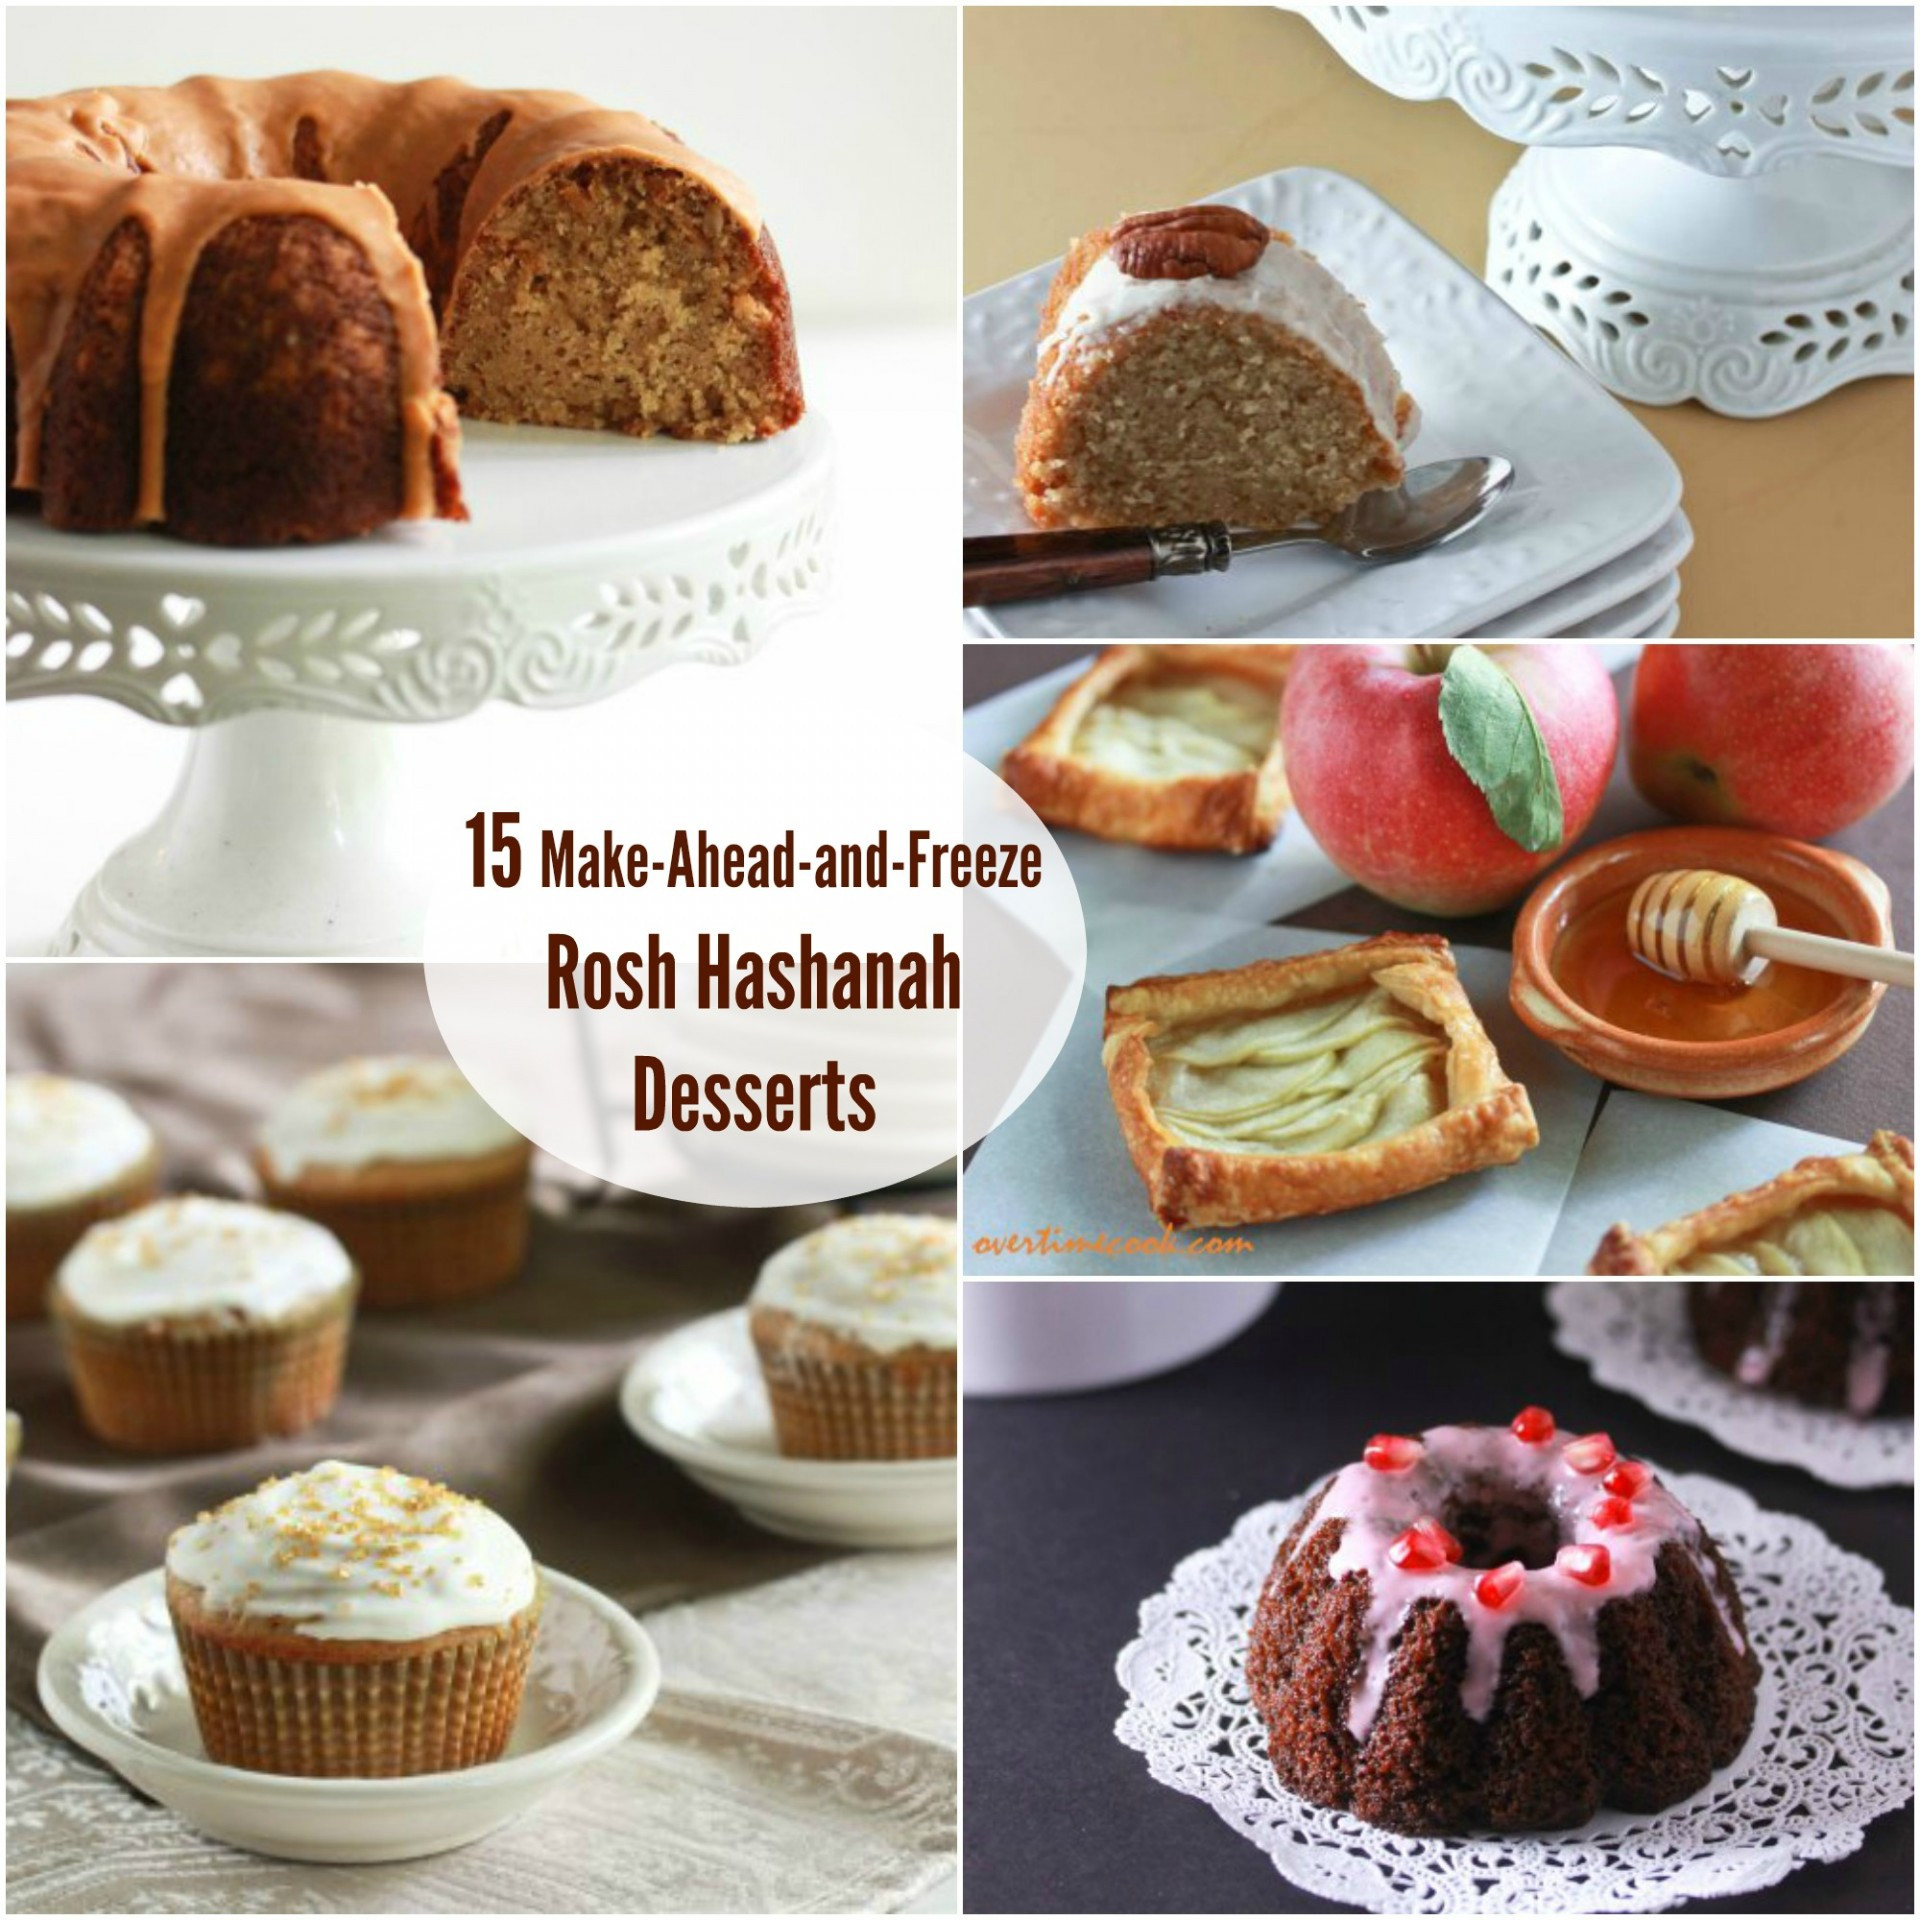 Rosh Hashanah Dessert Recipe
 15 Desserts to Make Ahead and Freeze for Rosh Hashanah